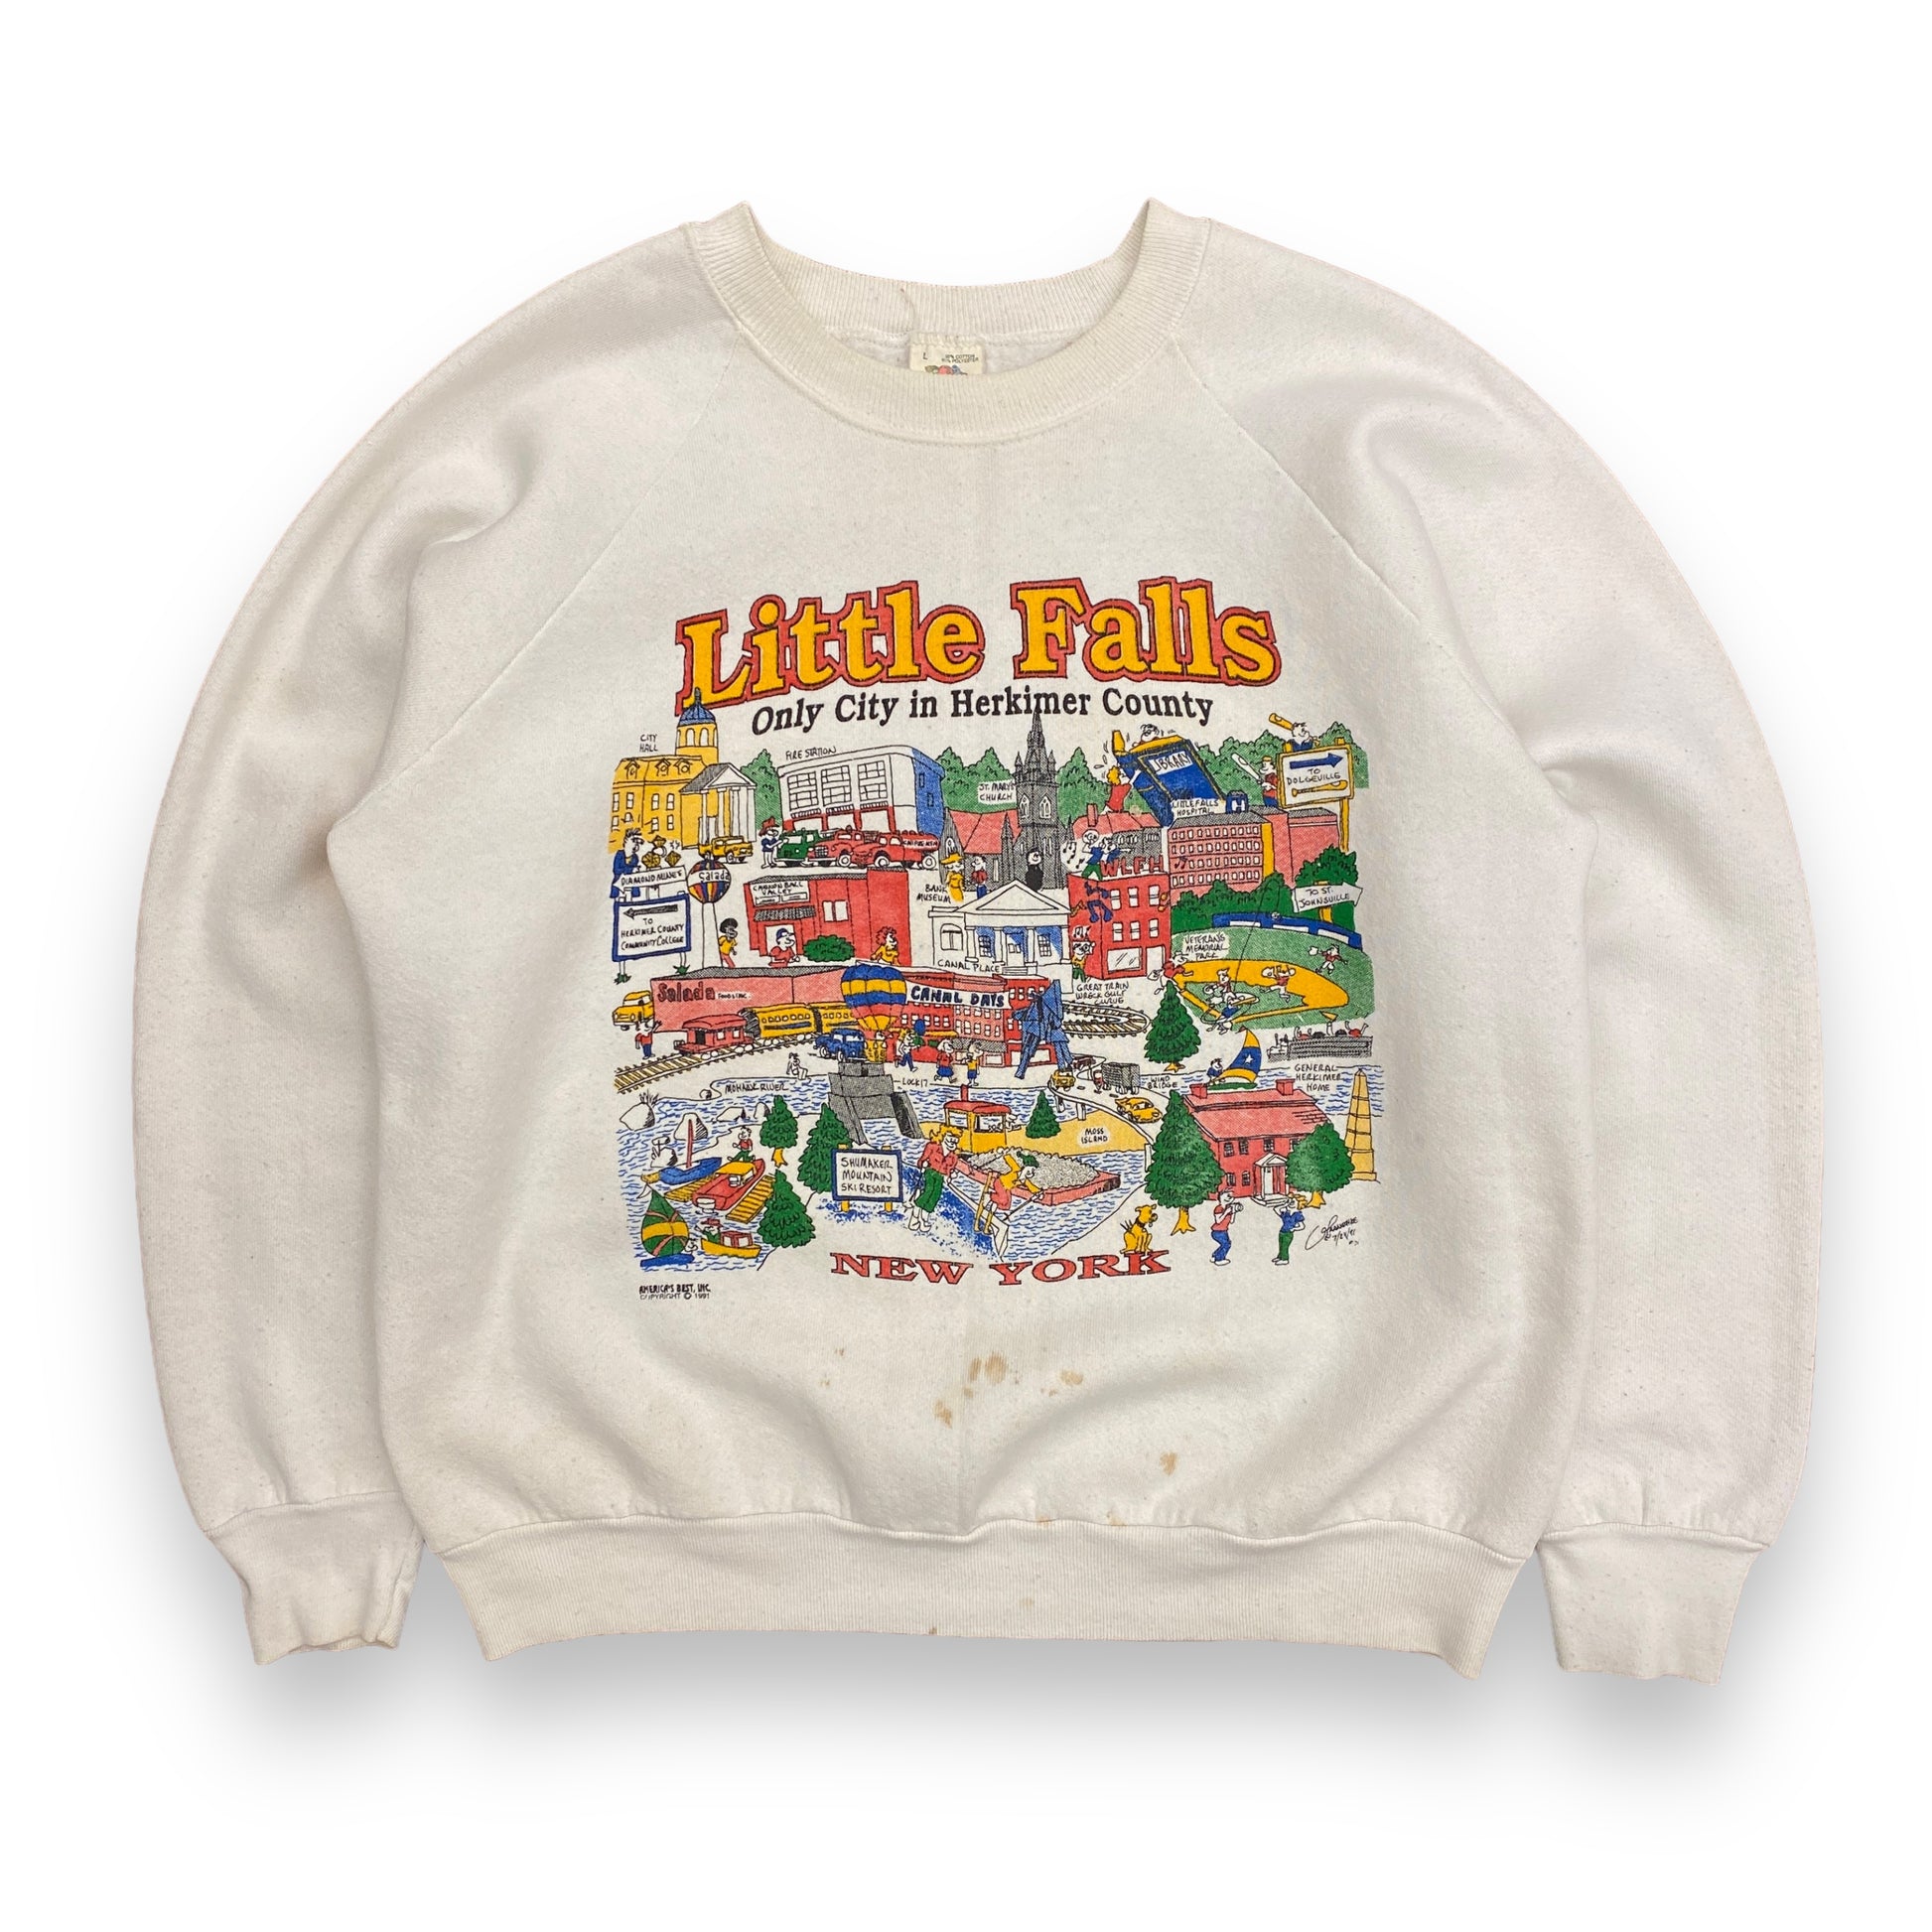 Vintage 90s NY&CO New York and Company Crewneck Sweatshirt Size